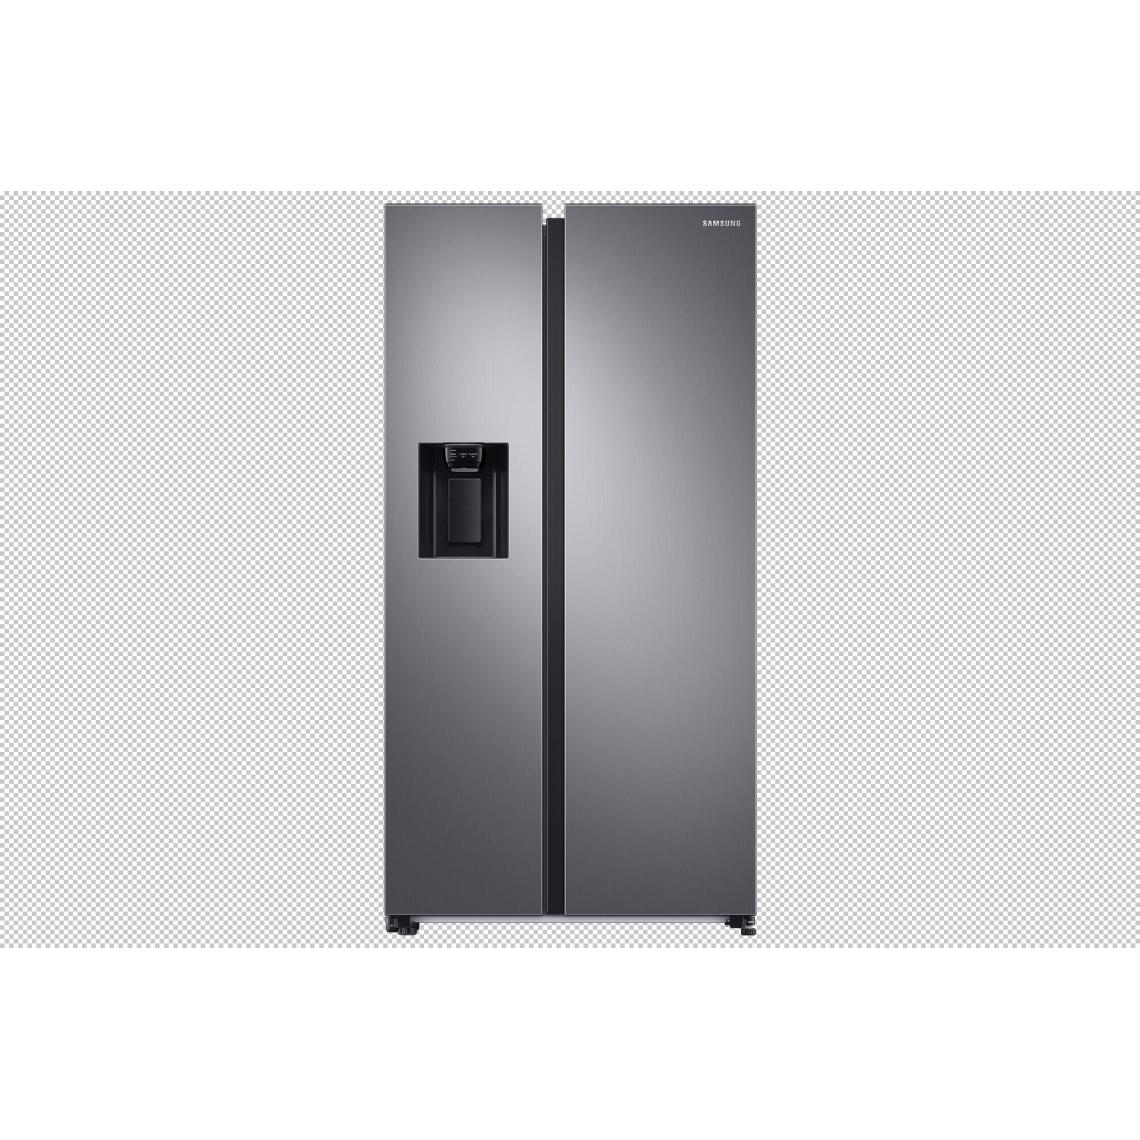 Samsung - Refrigerateur americain Samsung RS68A8841S9 - Réfrigérateur américain